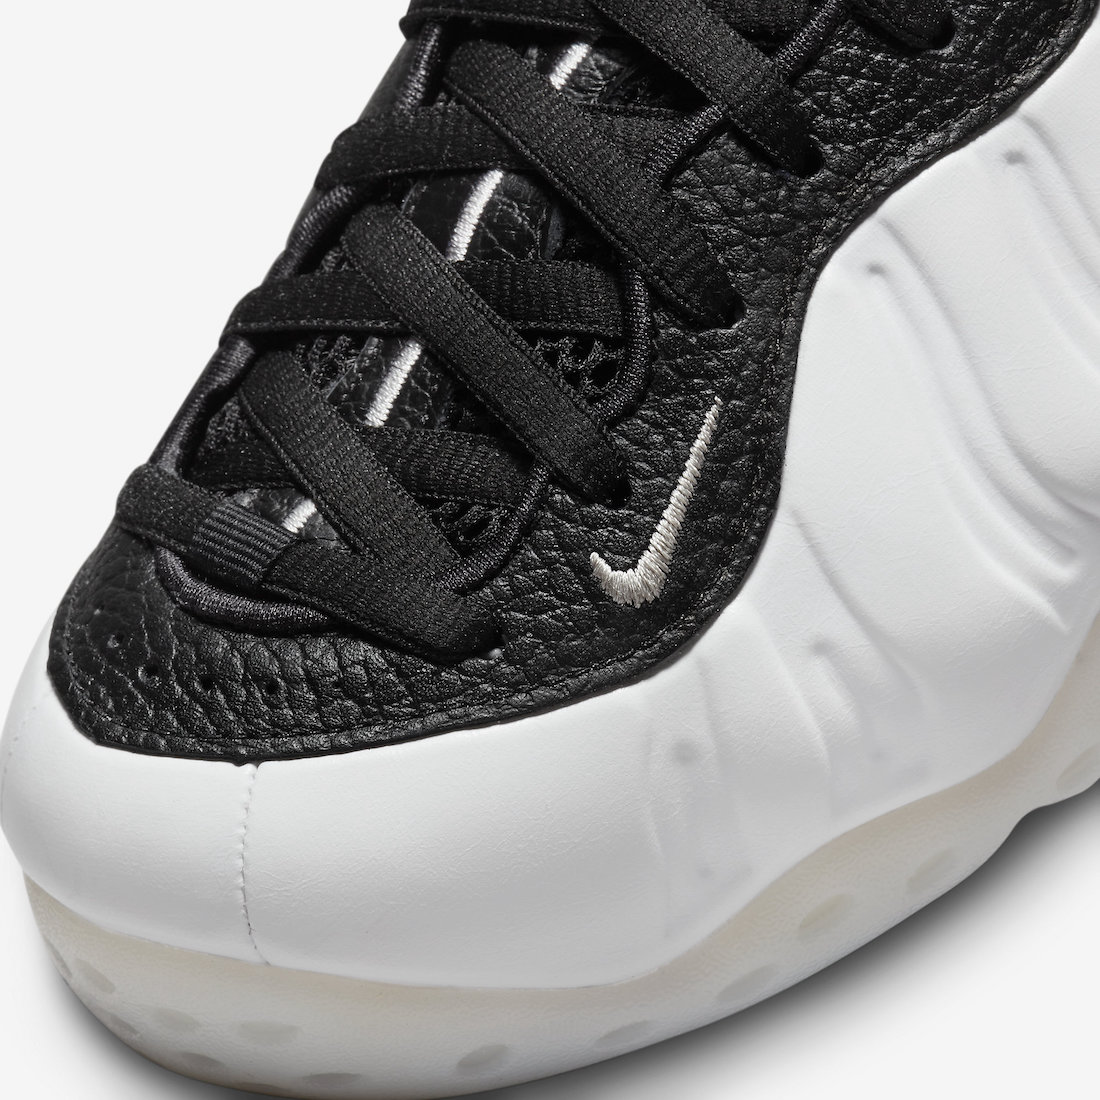 Nike Air Foamposite One Penny PE White Black DV0815-100 Release Date Price